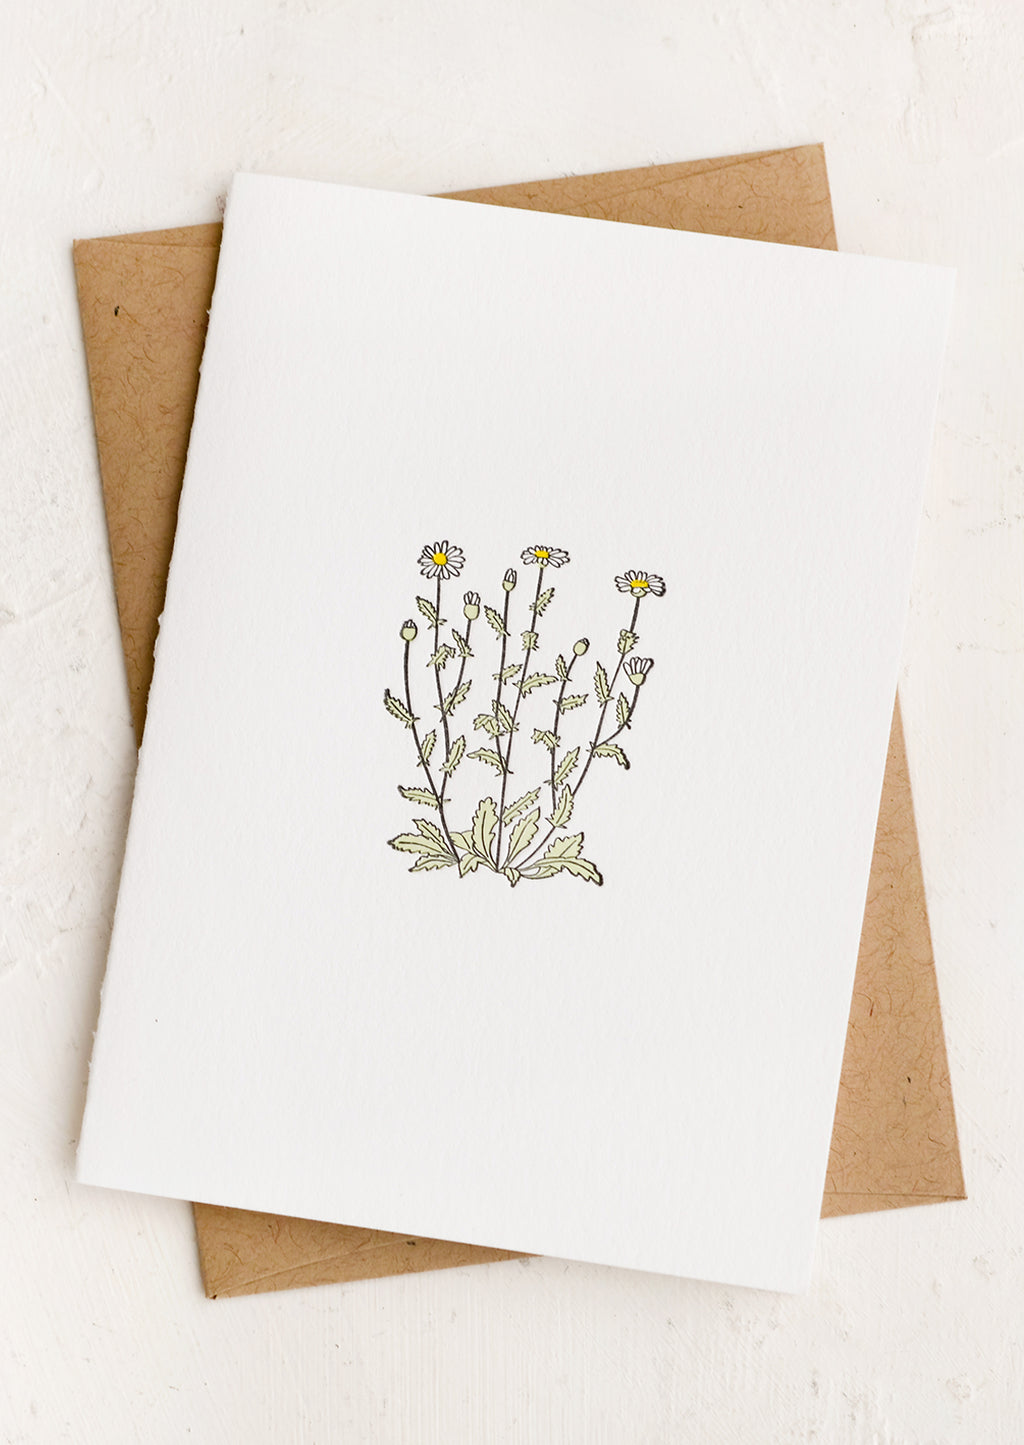 Daisy: A blank white card with daisy illustration.